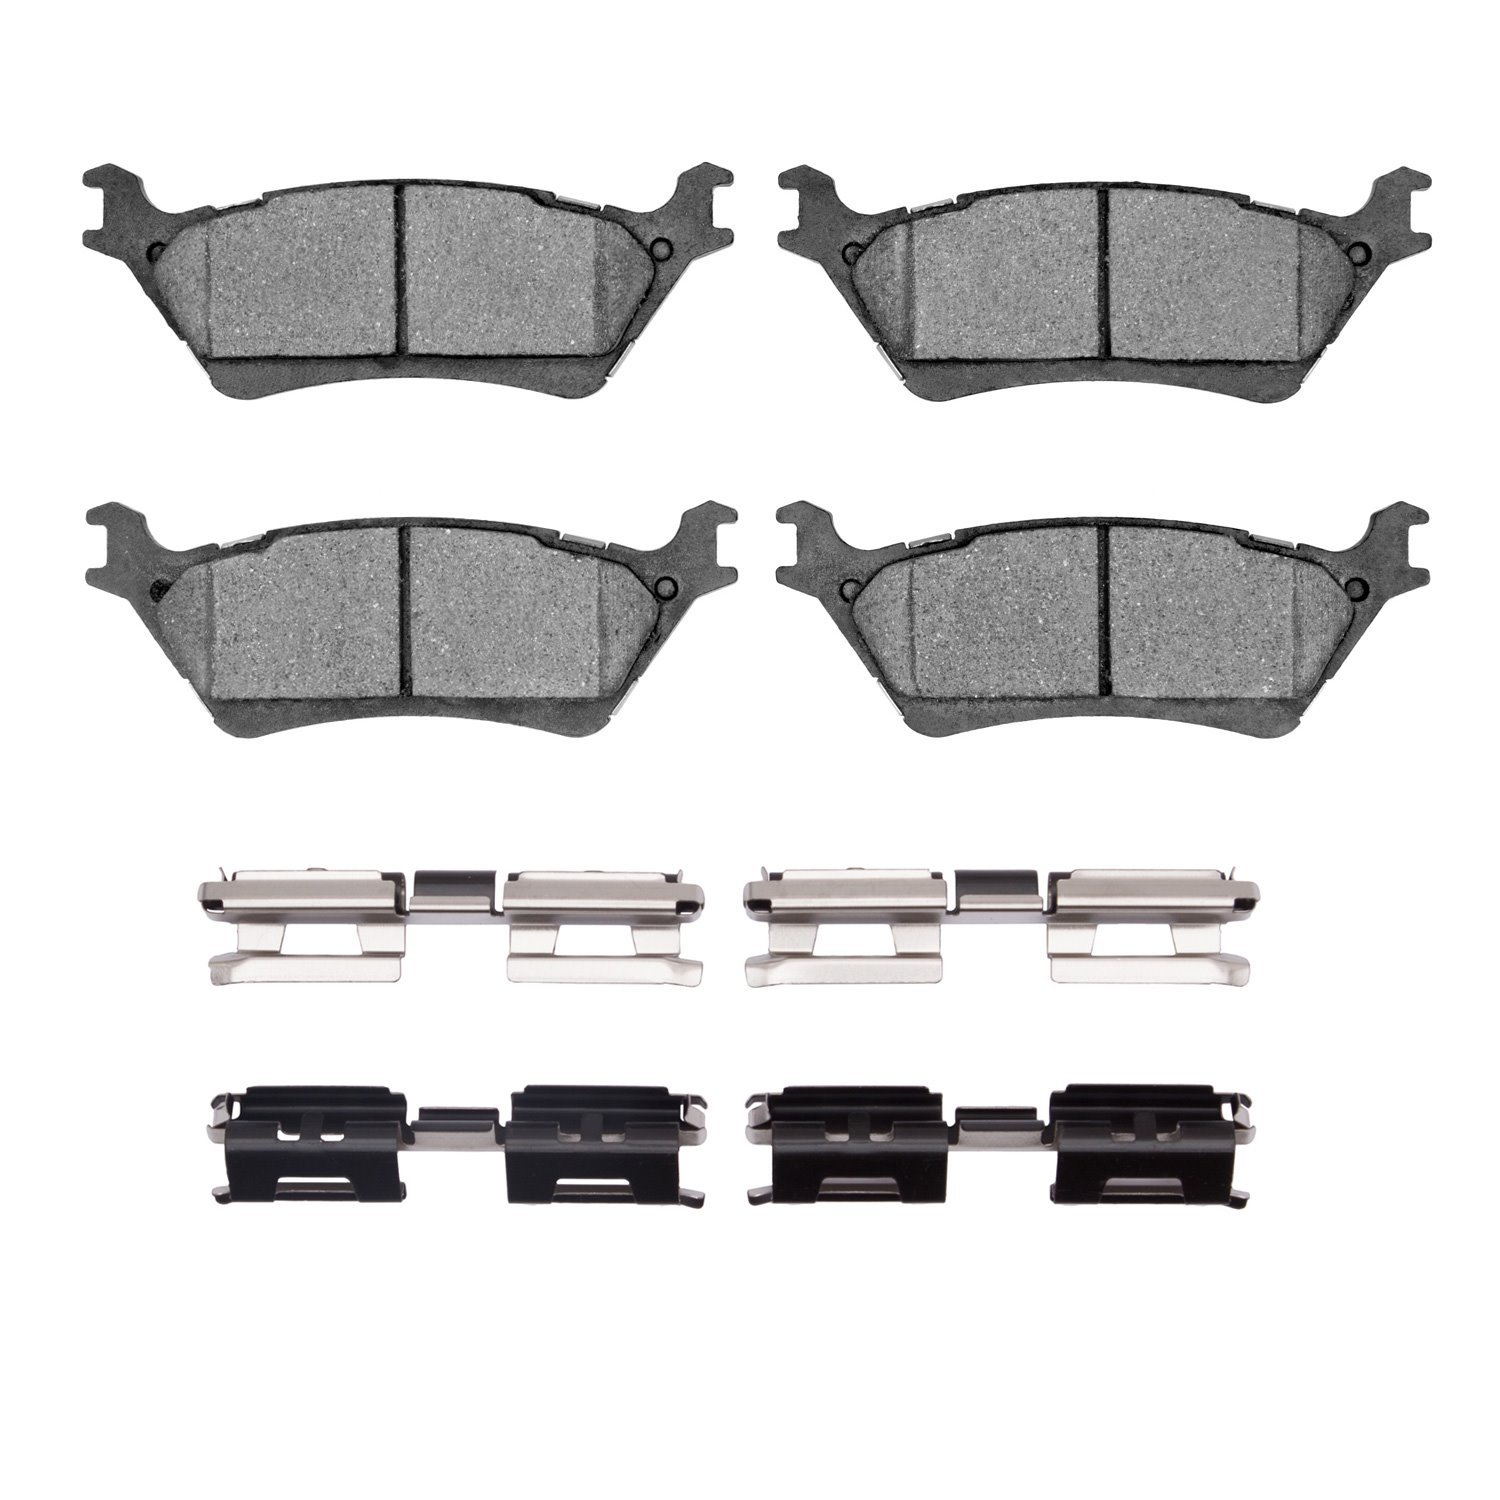 1214-1602-01 Heavy-Duty Brake Pads & Hardware Kit, 2012-2020 Ford/Lincoln/Mercury/Mazda, Position: Rear